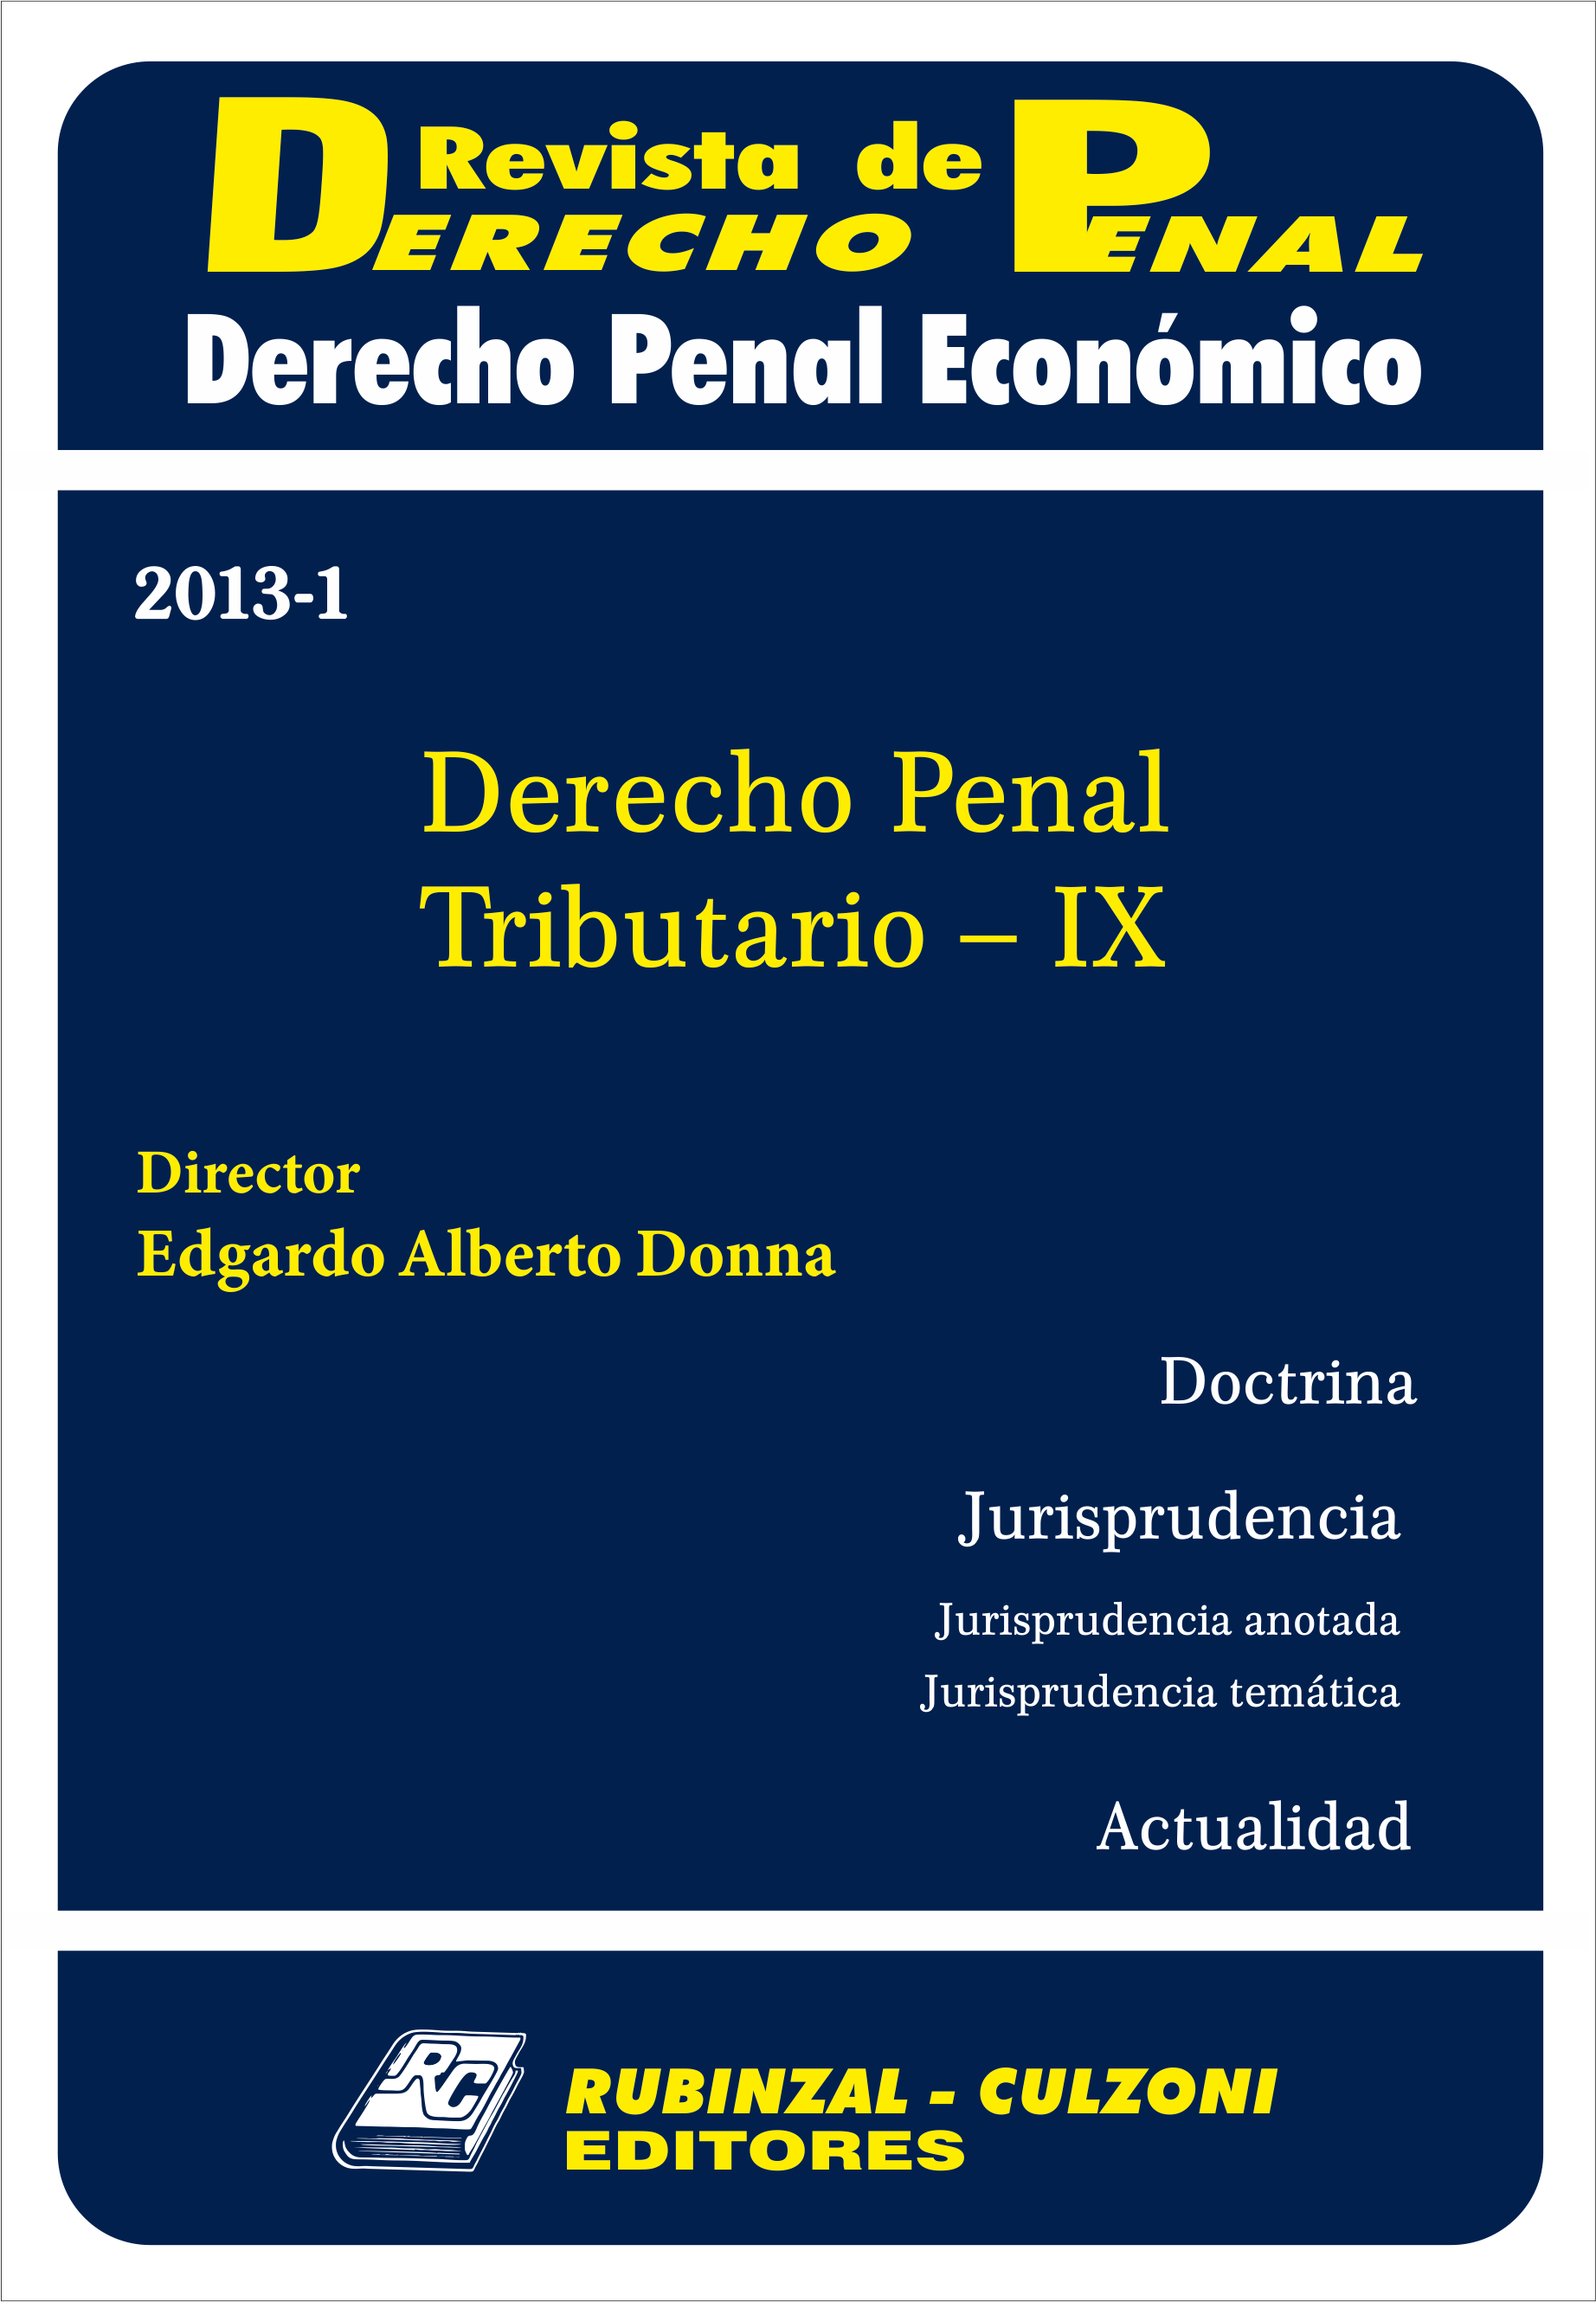 Derecho Penal Tributario - IX. [2013-1]